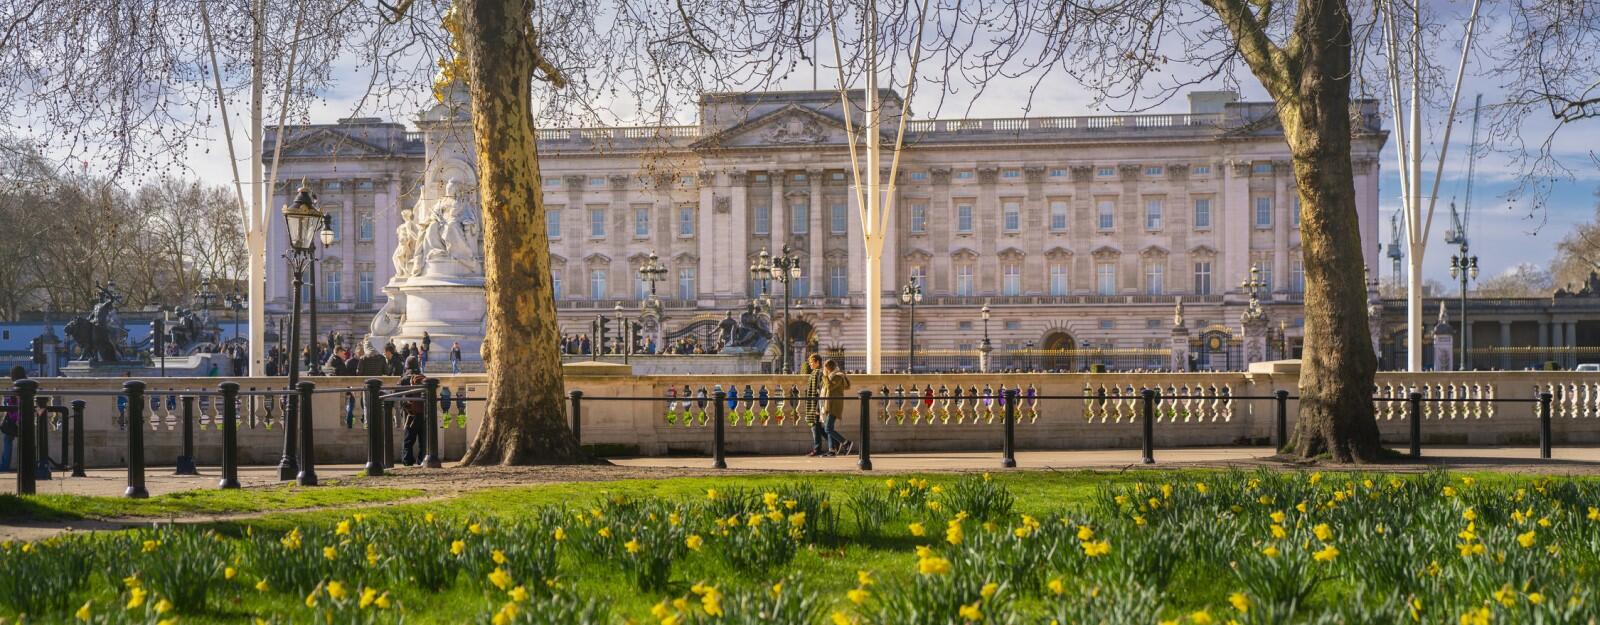 Buckingham Palace in spring